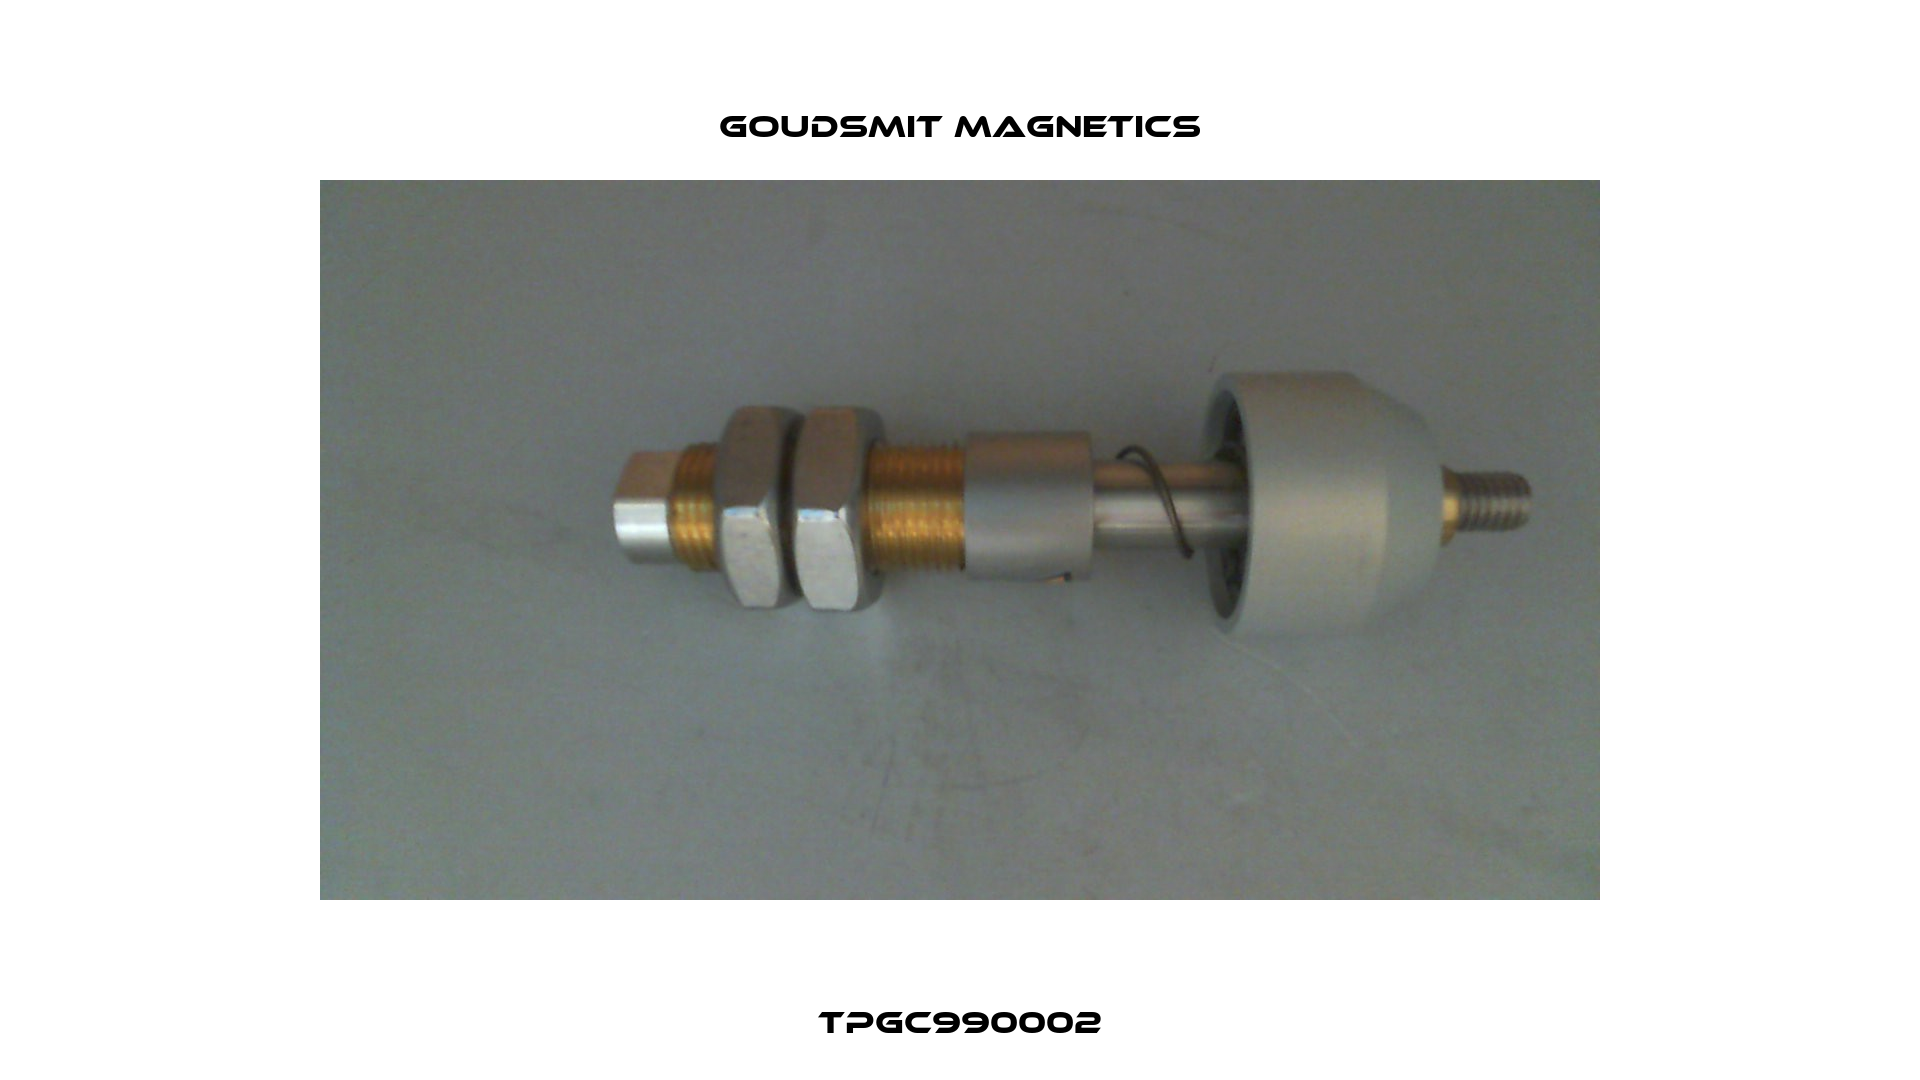 TPGC990002 Goudsmit Magnetics